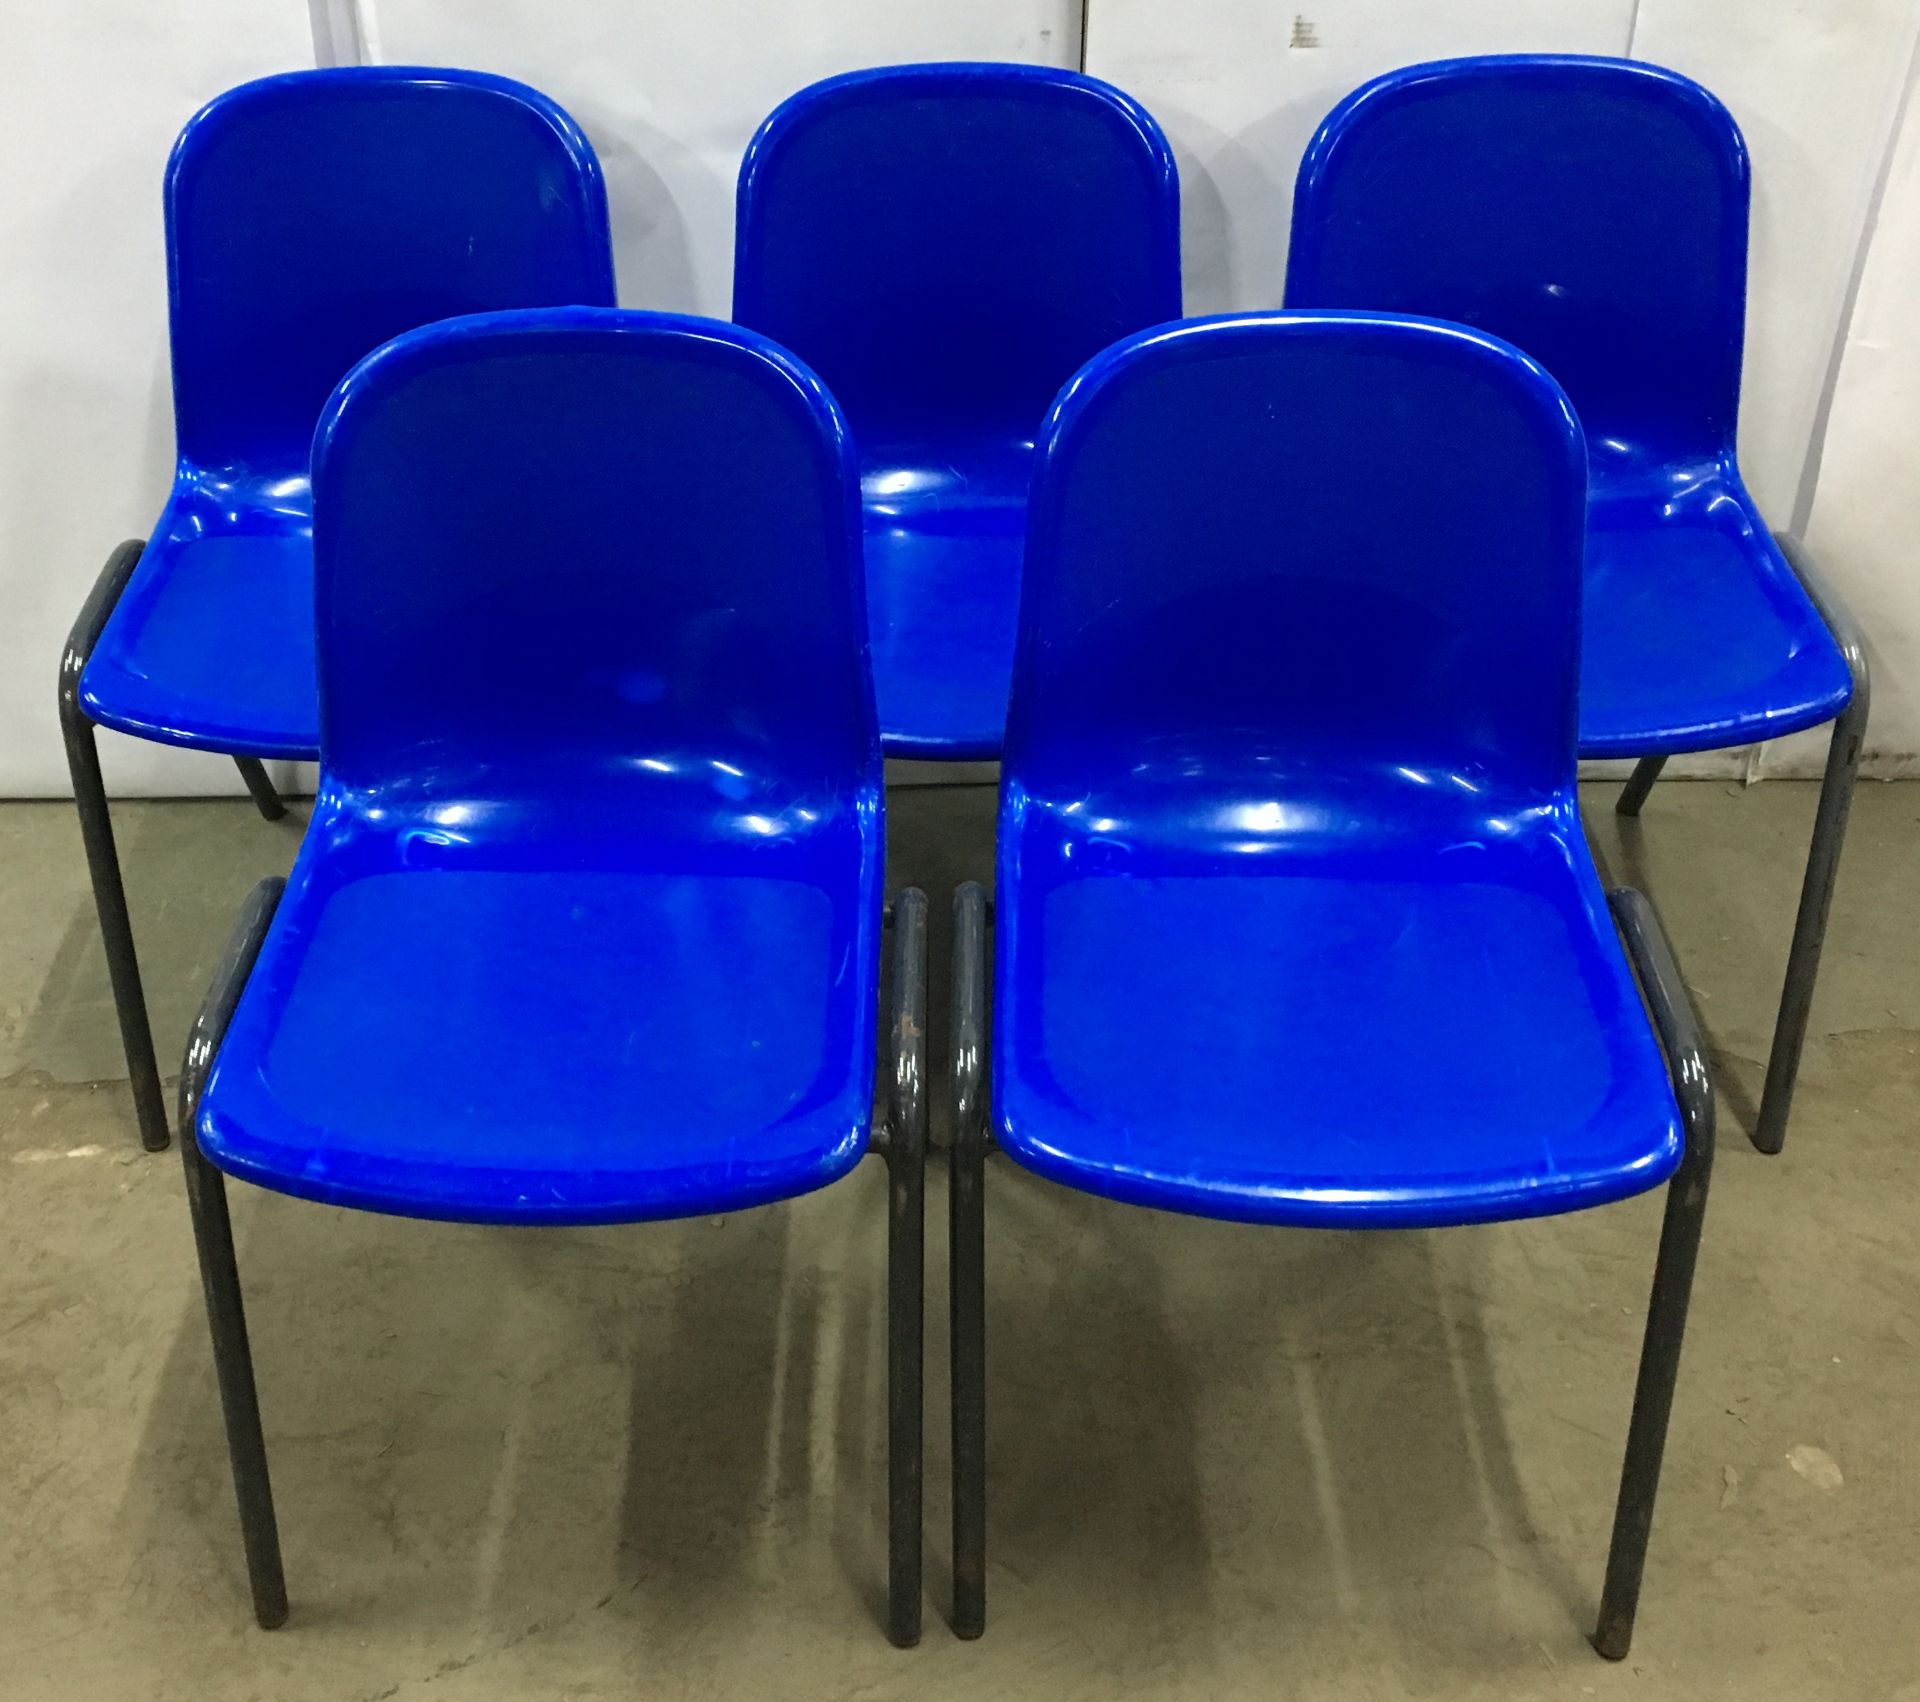 5x Blue Plastic School Chairs